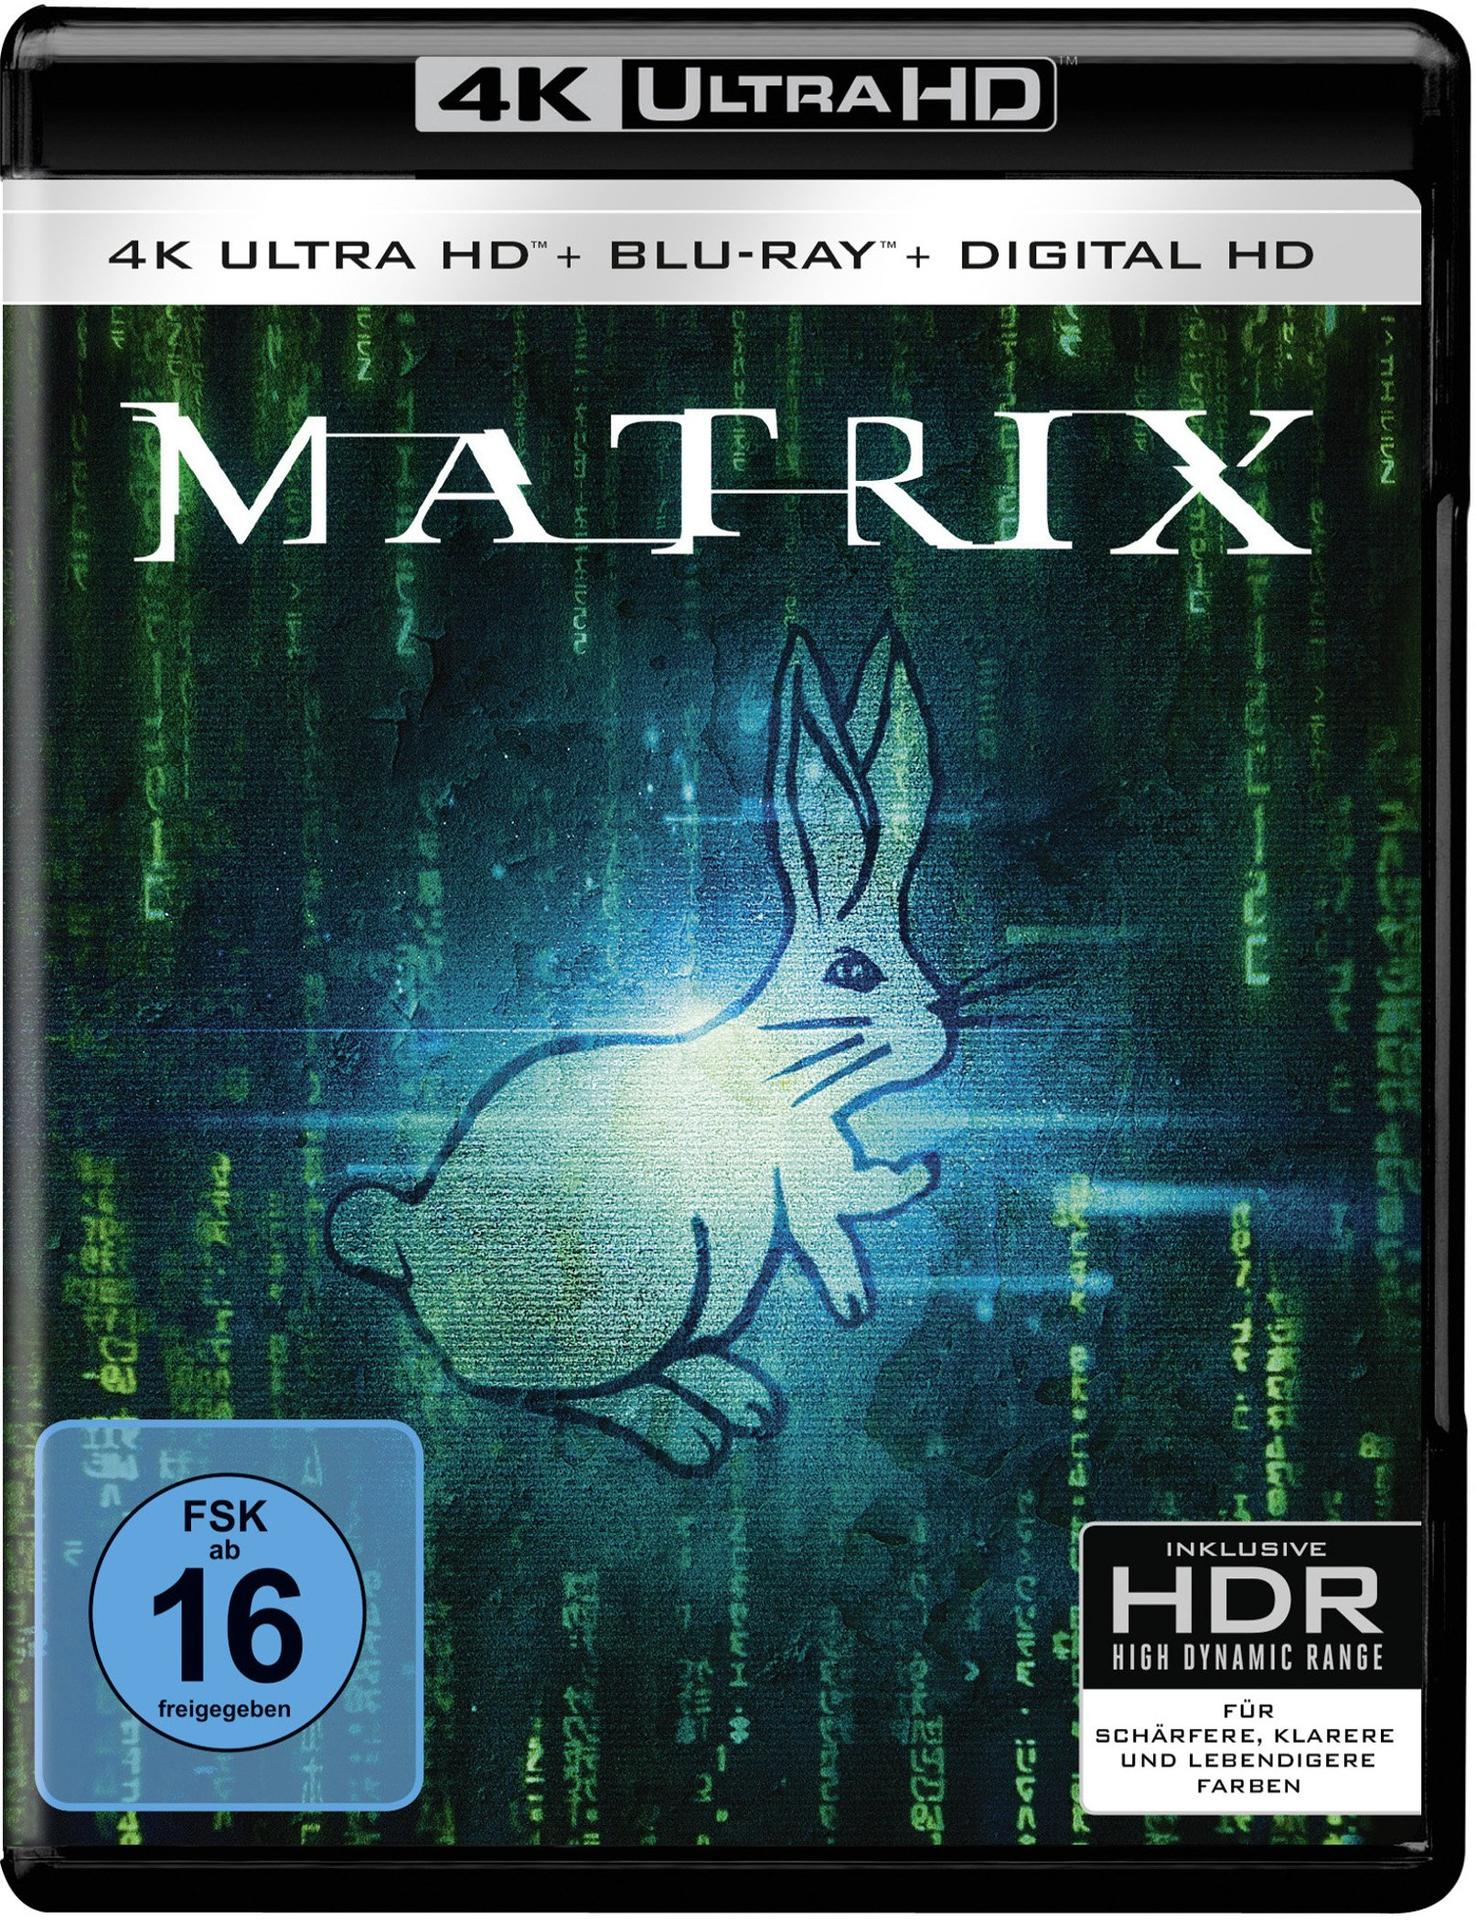 Collection + Premium 4K HD Blu-ray Matrix - Ultra Blu-ray Blu-ray